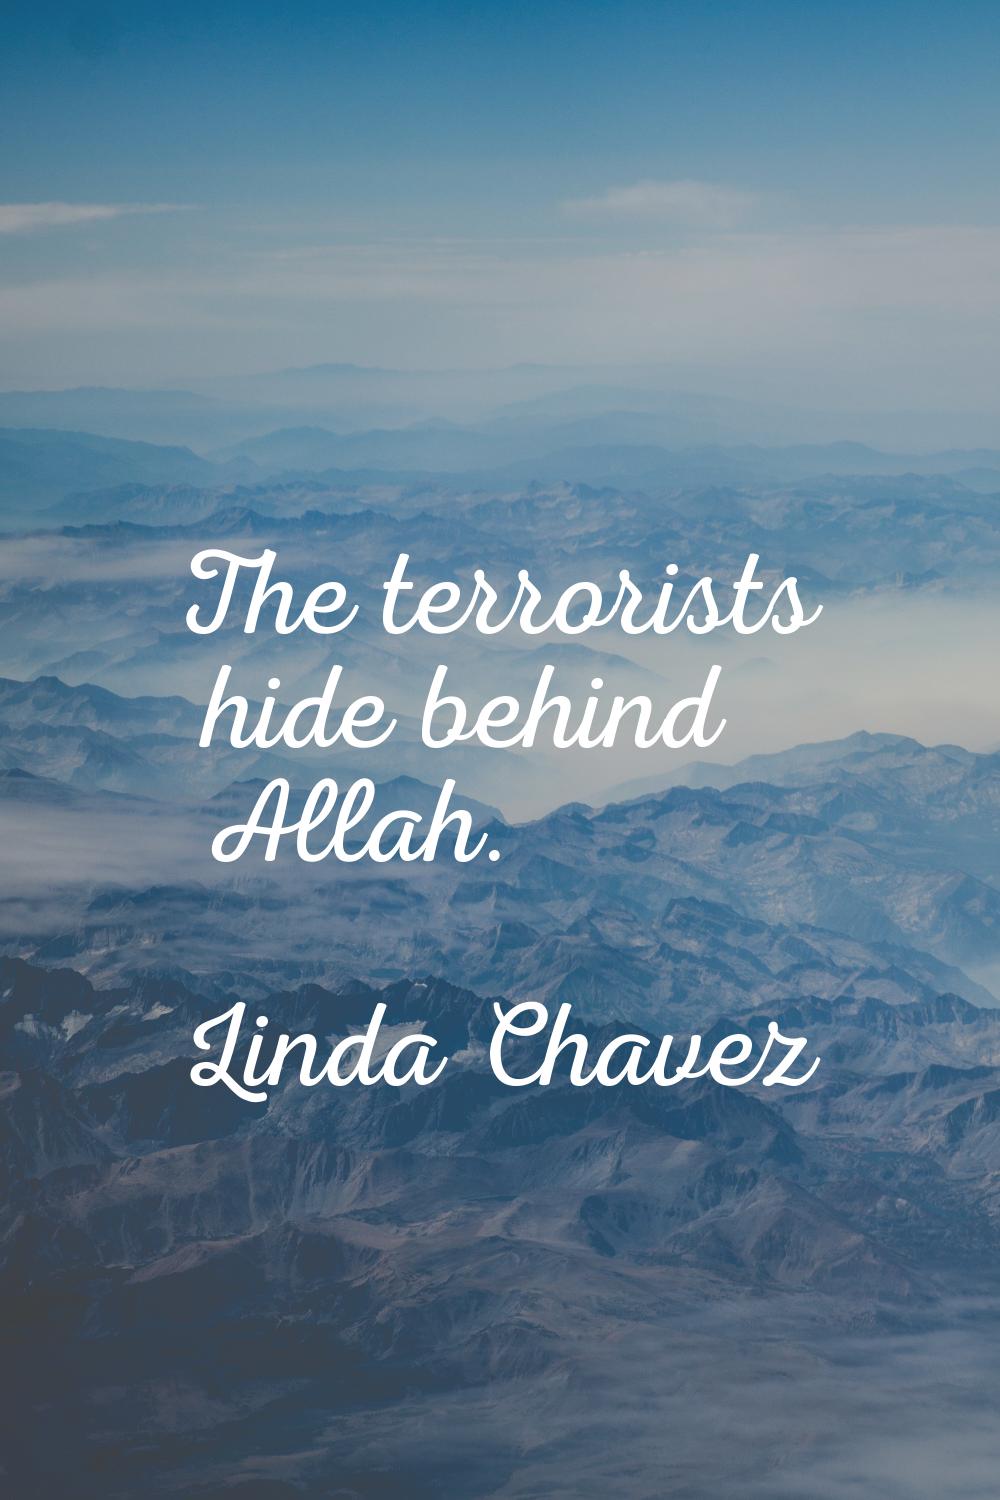 The terrorists hide behind Allah.